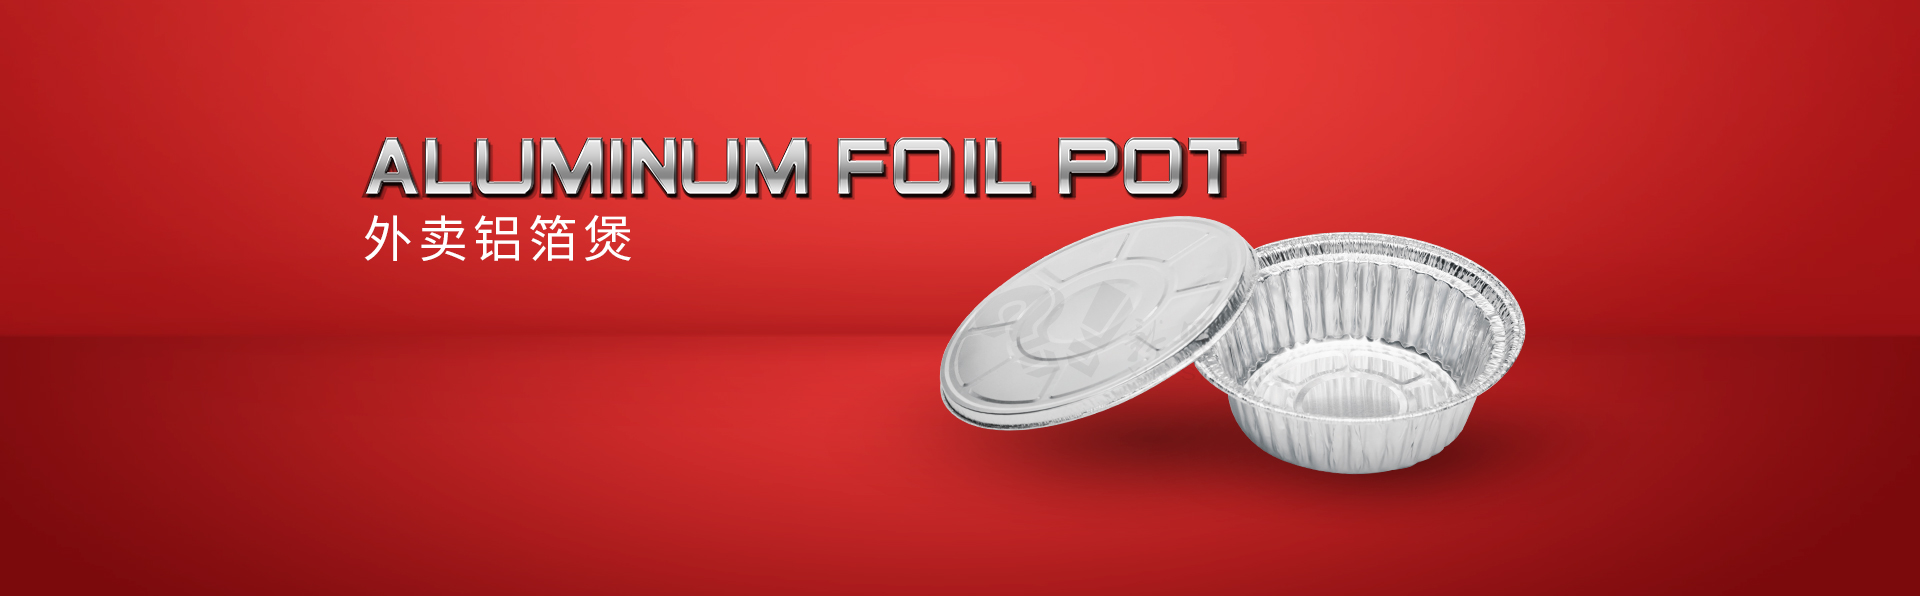 xinsiwei_supporing_materials_aluminum_foil_pot_square_details_page.jpg